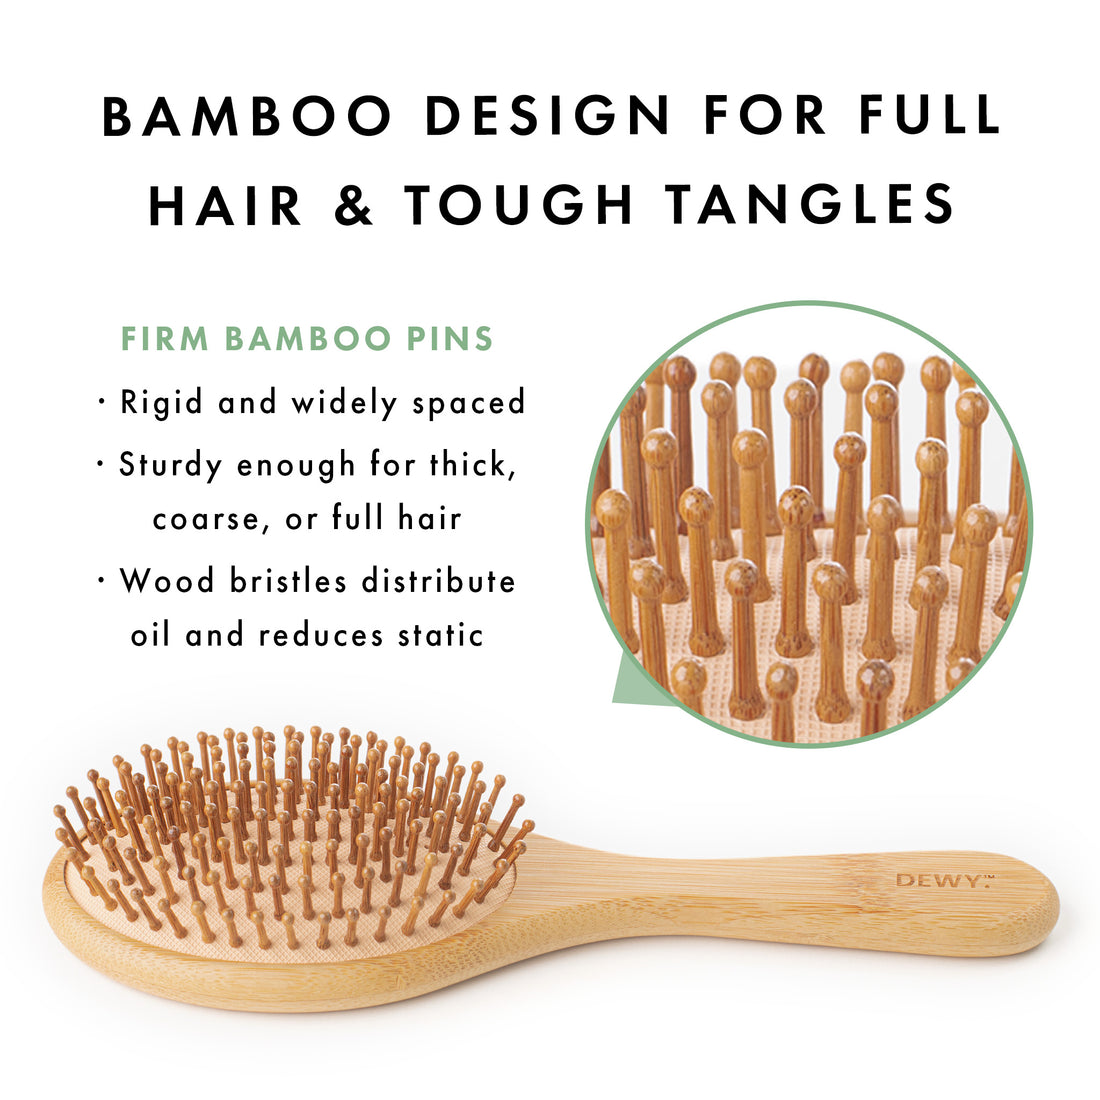 Bamboo Bristle Oval Brush